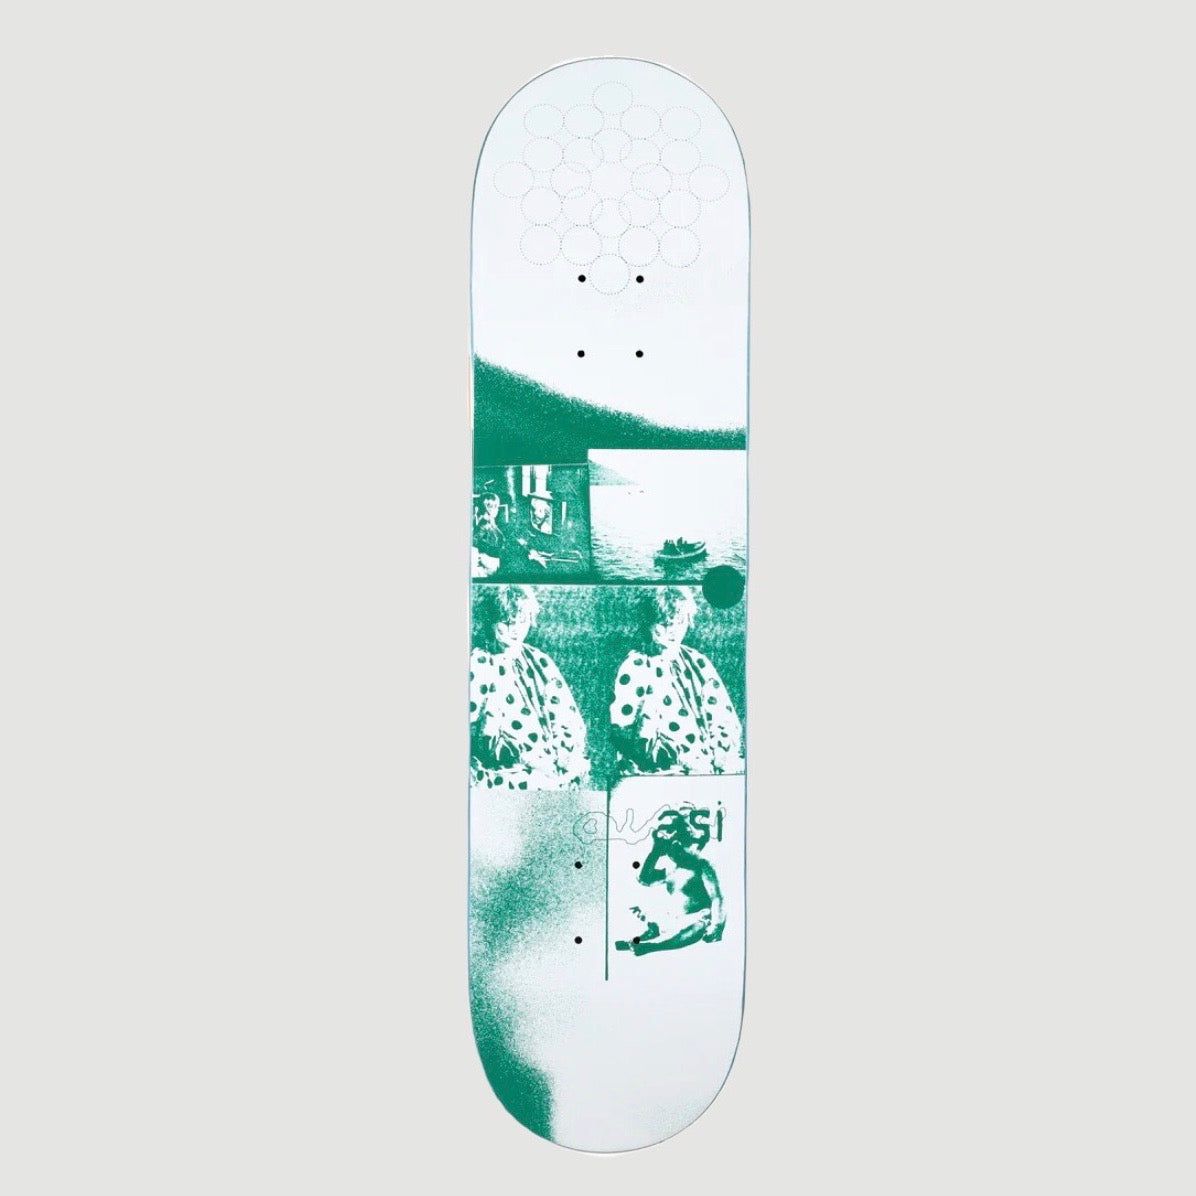 Quasi Distilled Skateboard Deck 8.0